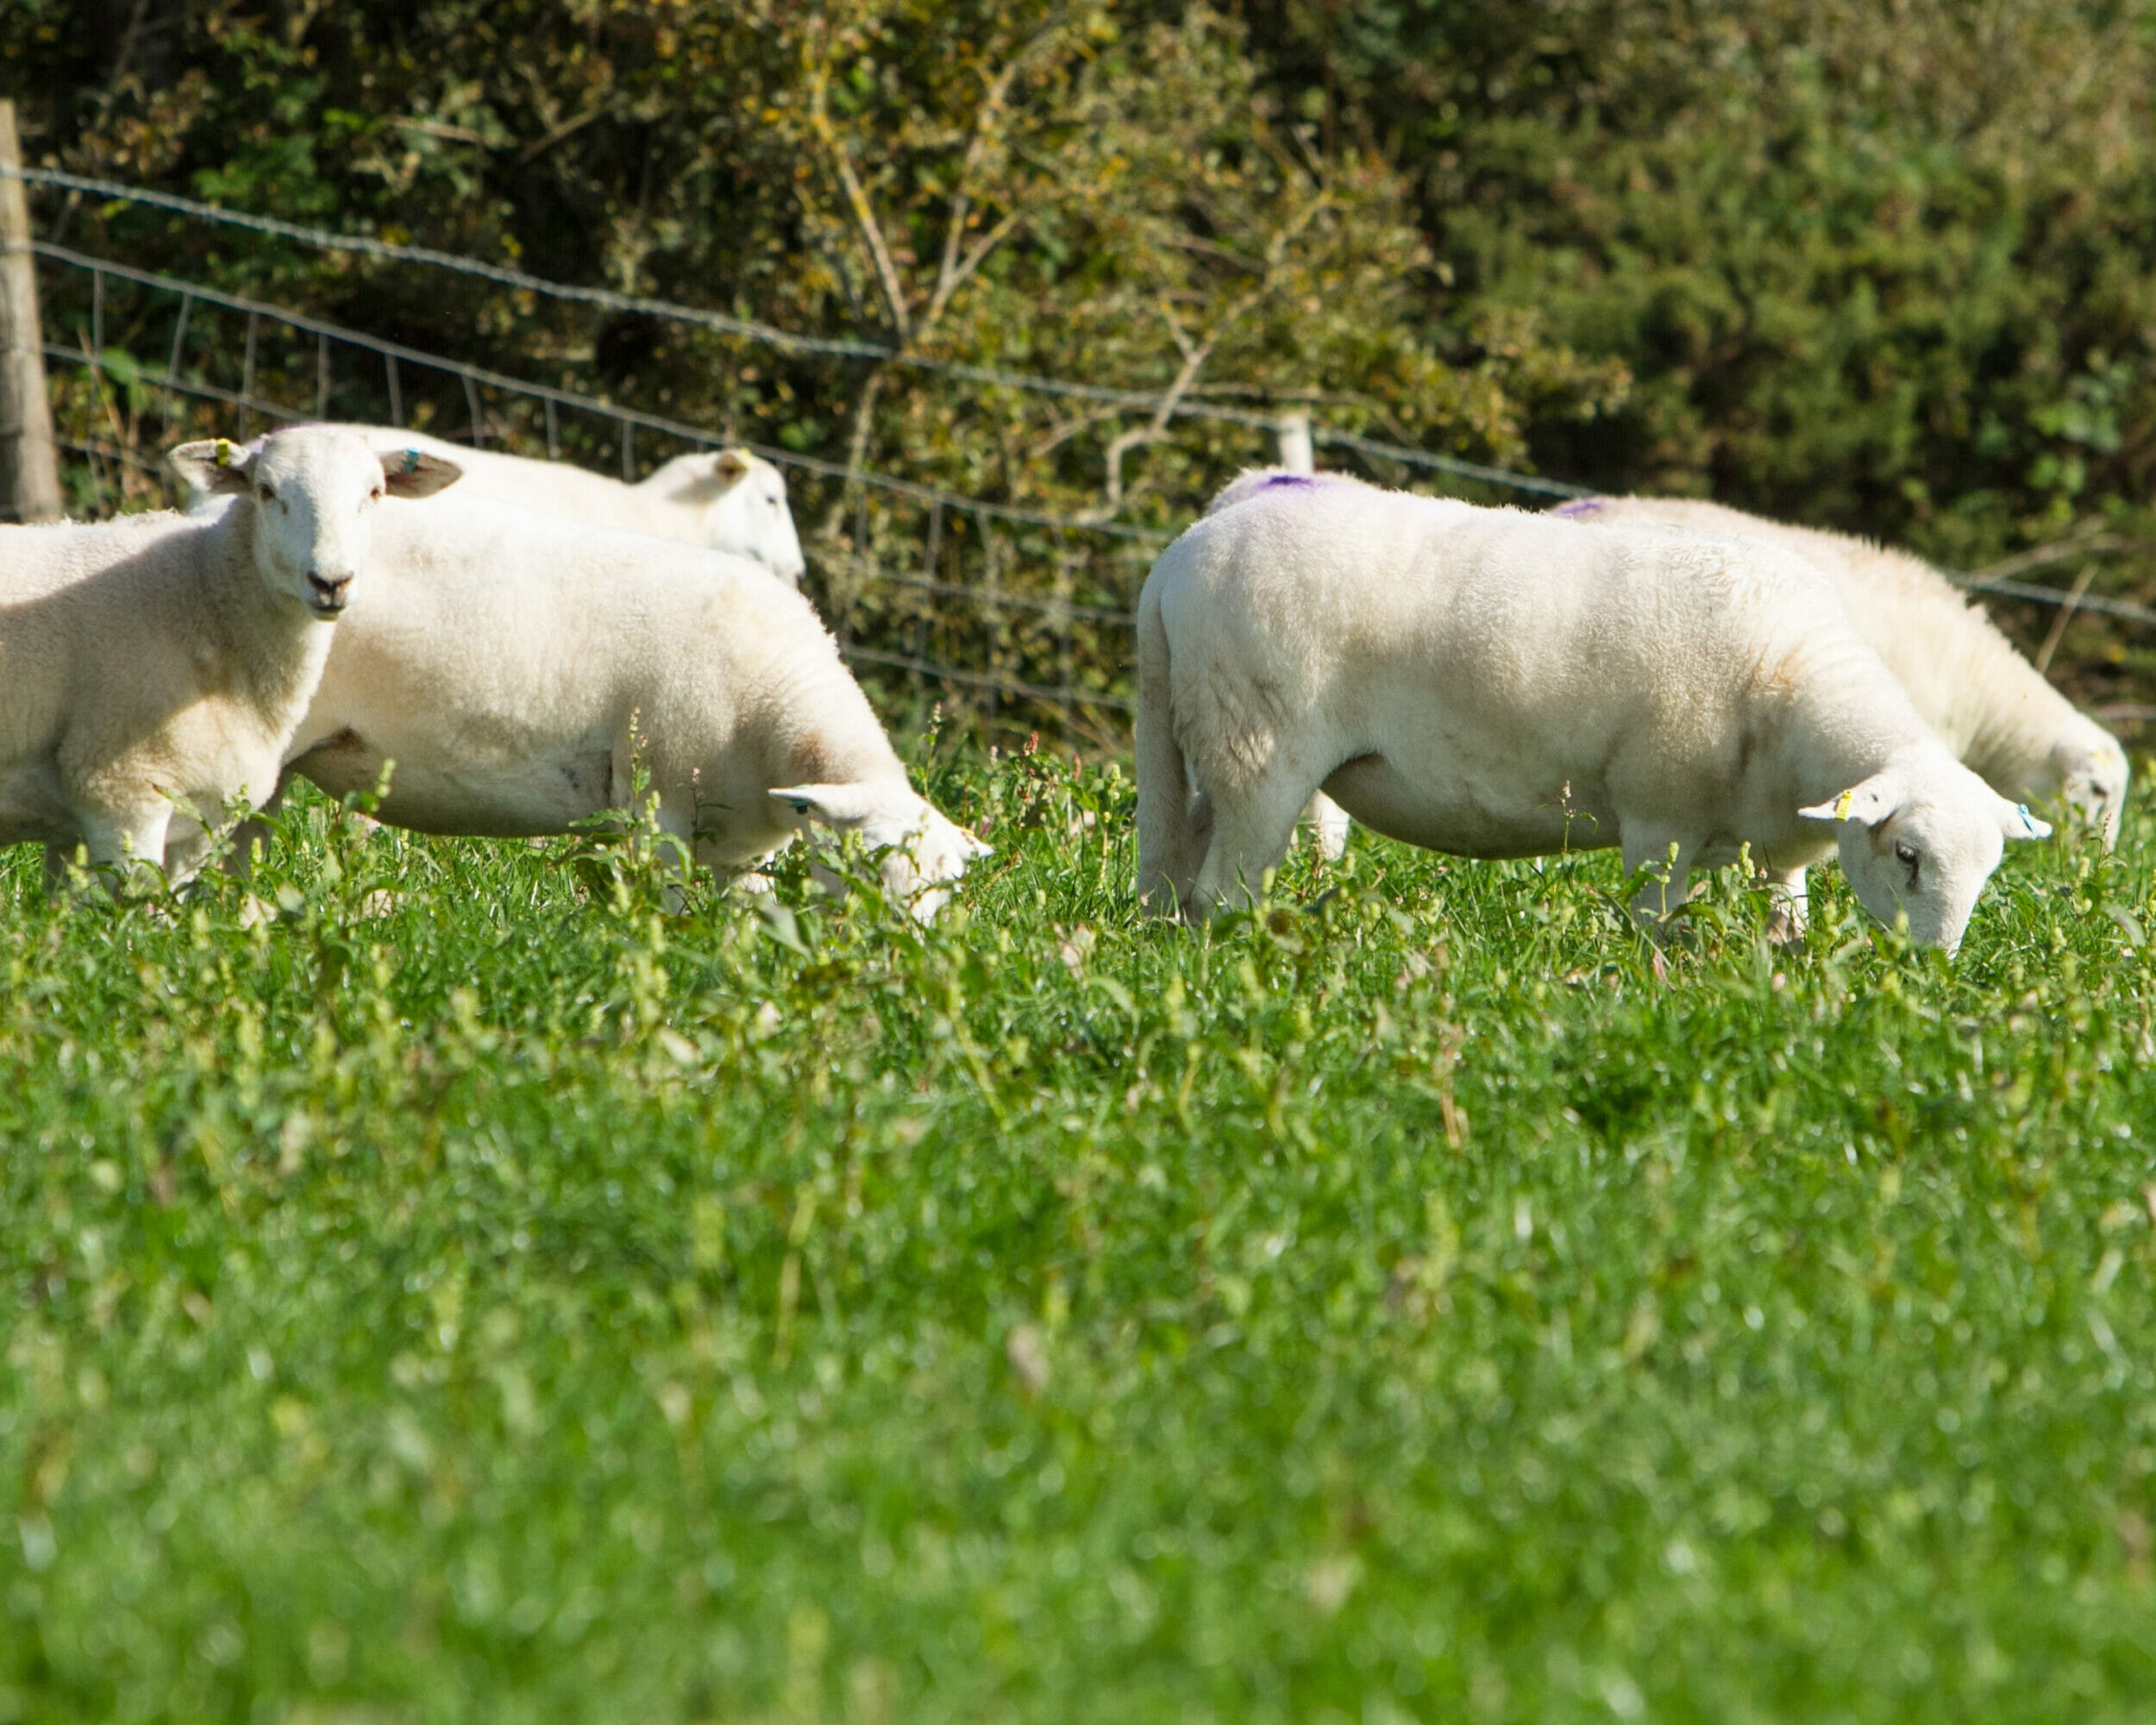 Sheep grazing SMG-Polycrop